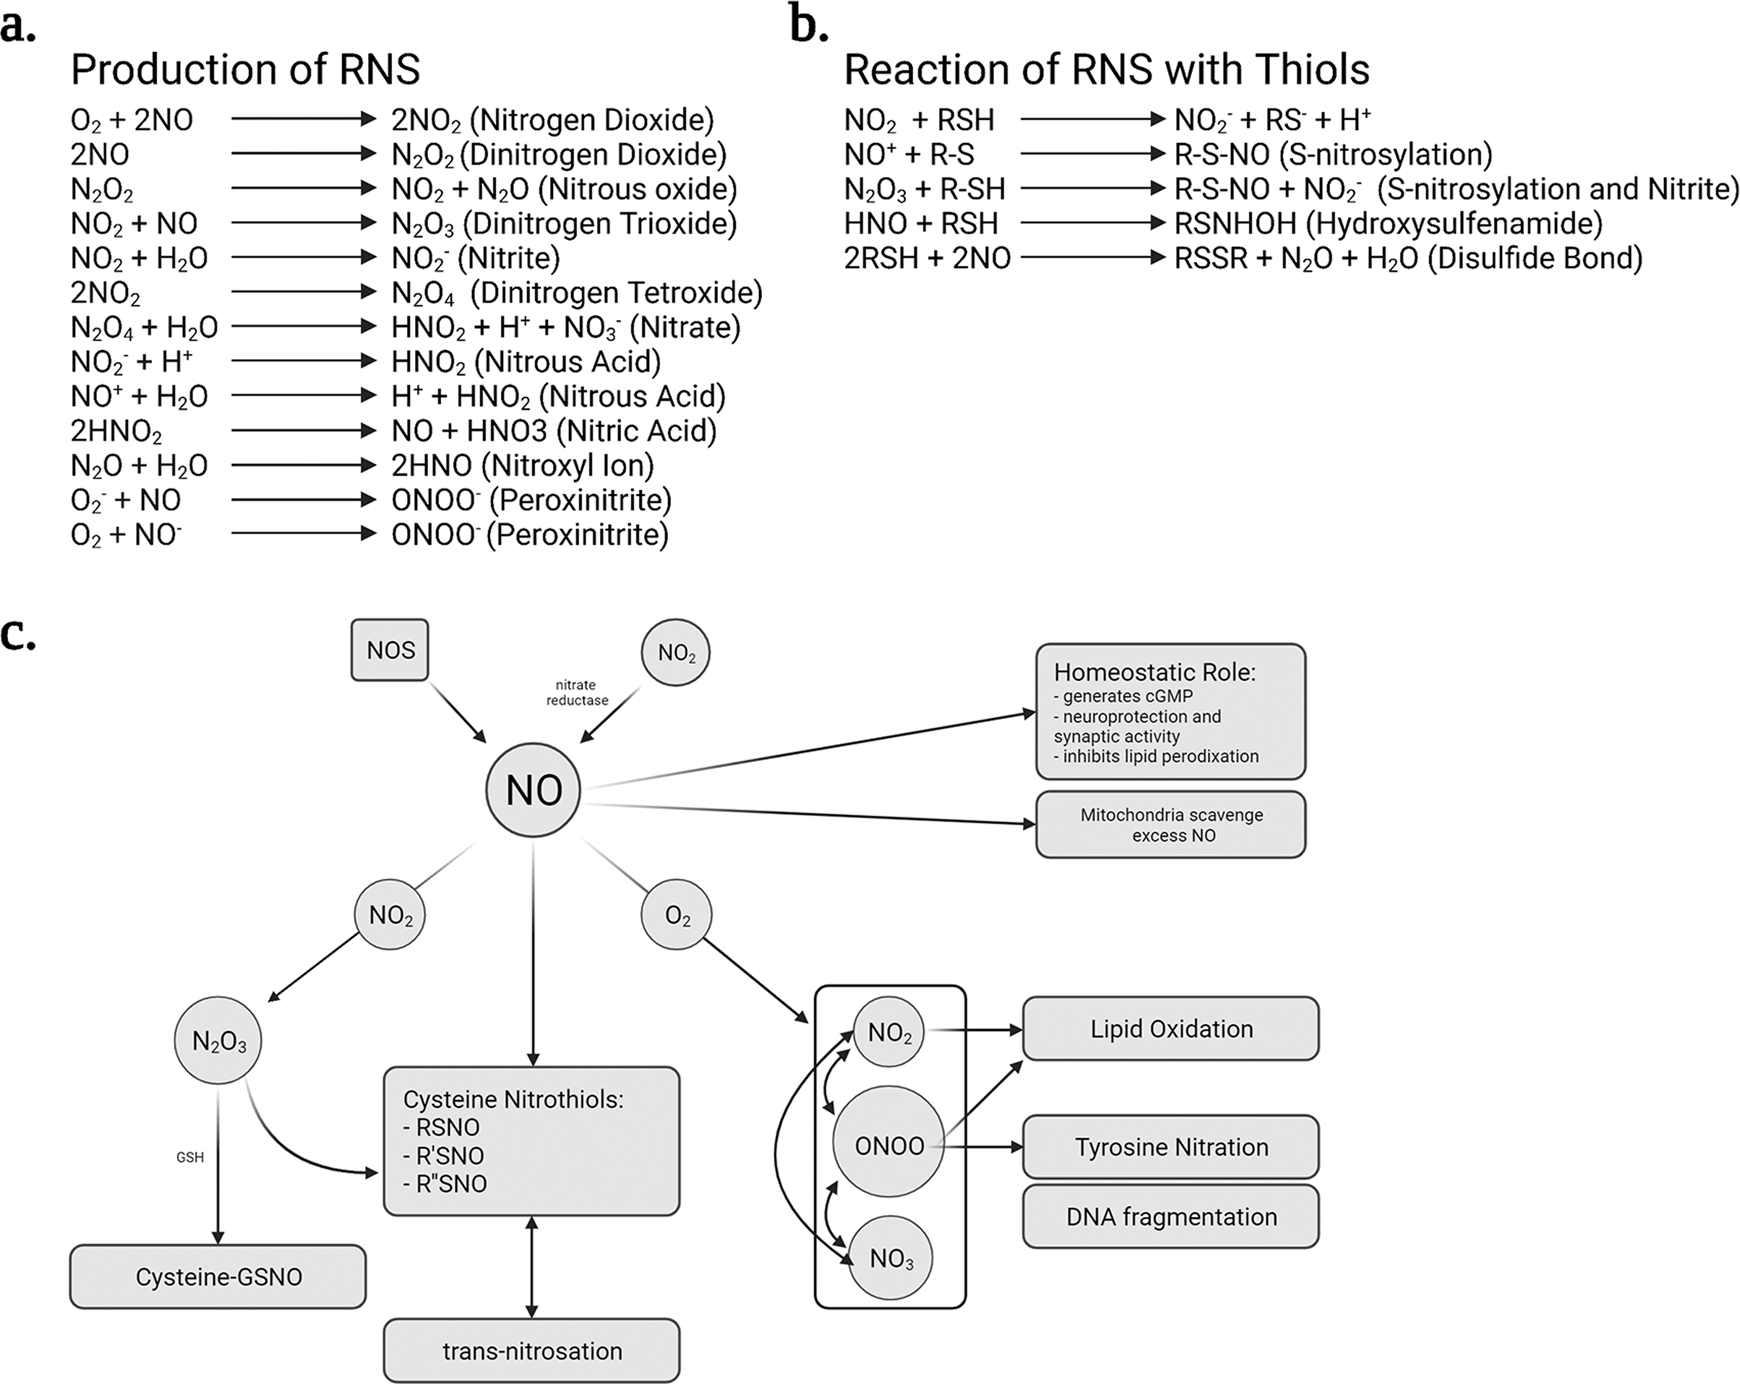 Schematic representation of the roles of NO, ONOO-, & cGMP in